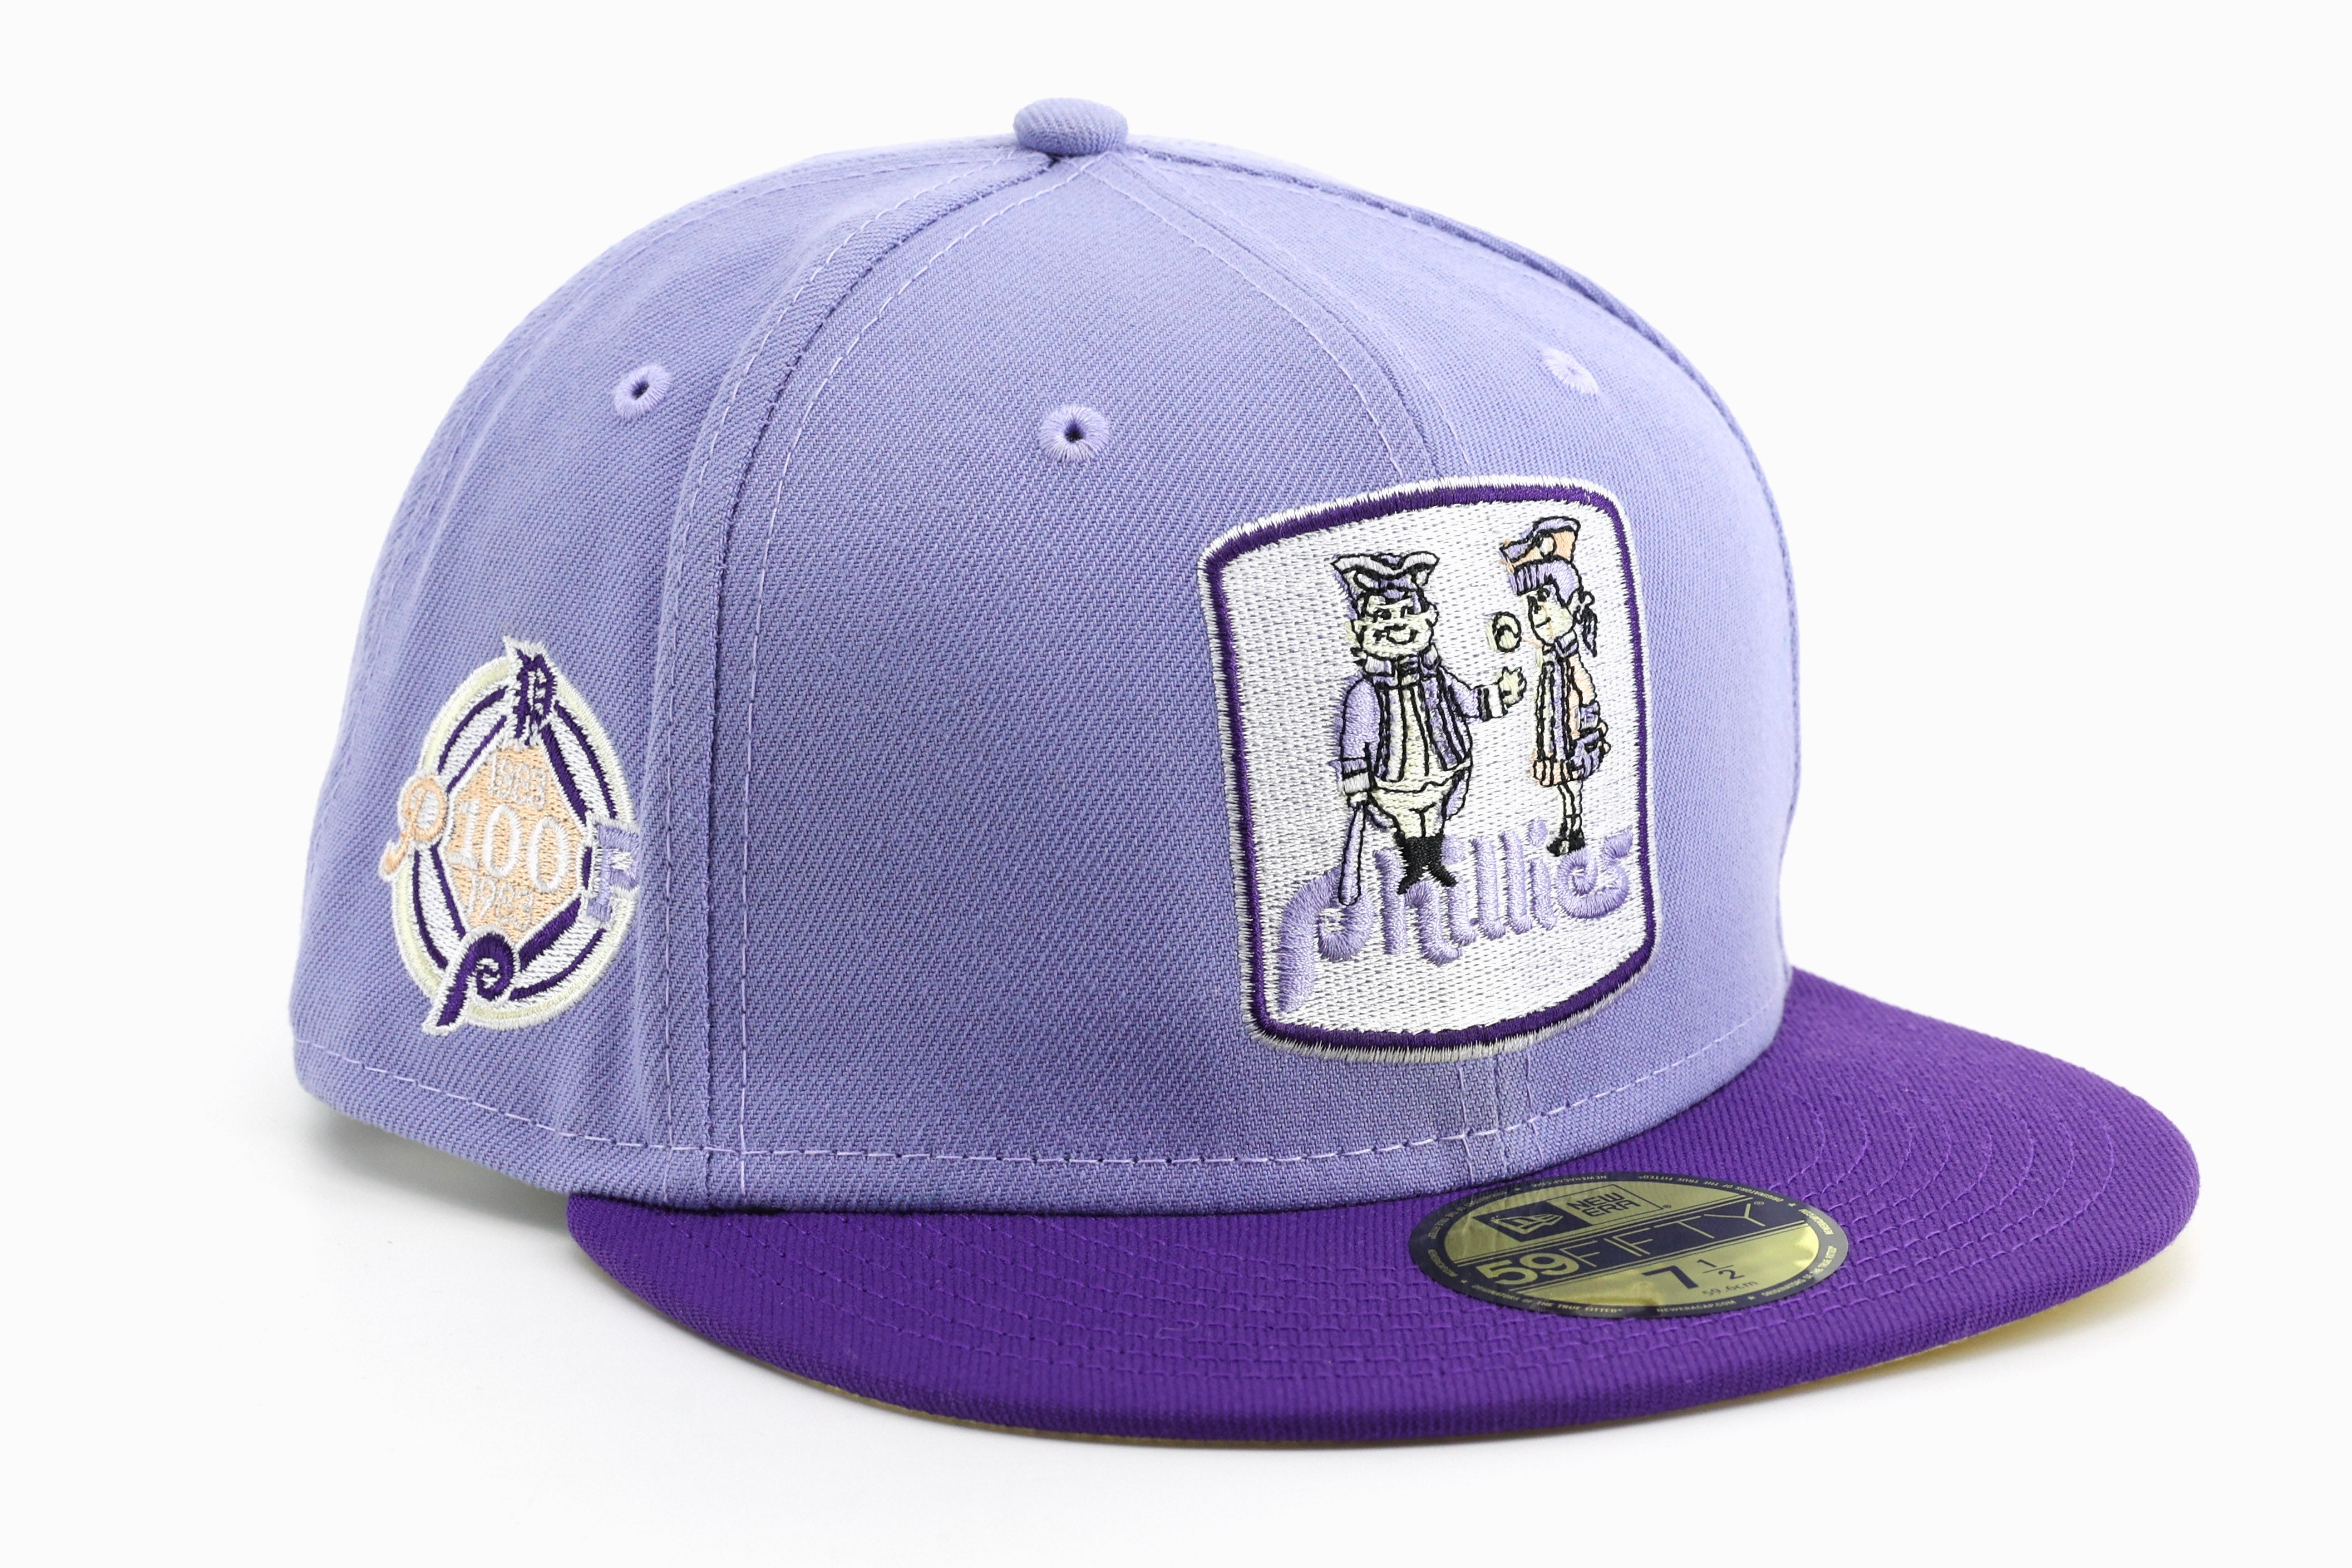 New Era Hat - Philadelphia Phillies - Lilac / Purple - 7 3/8 / Lilac /  Purple